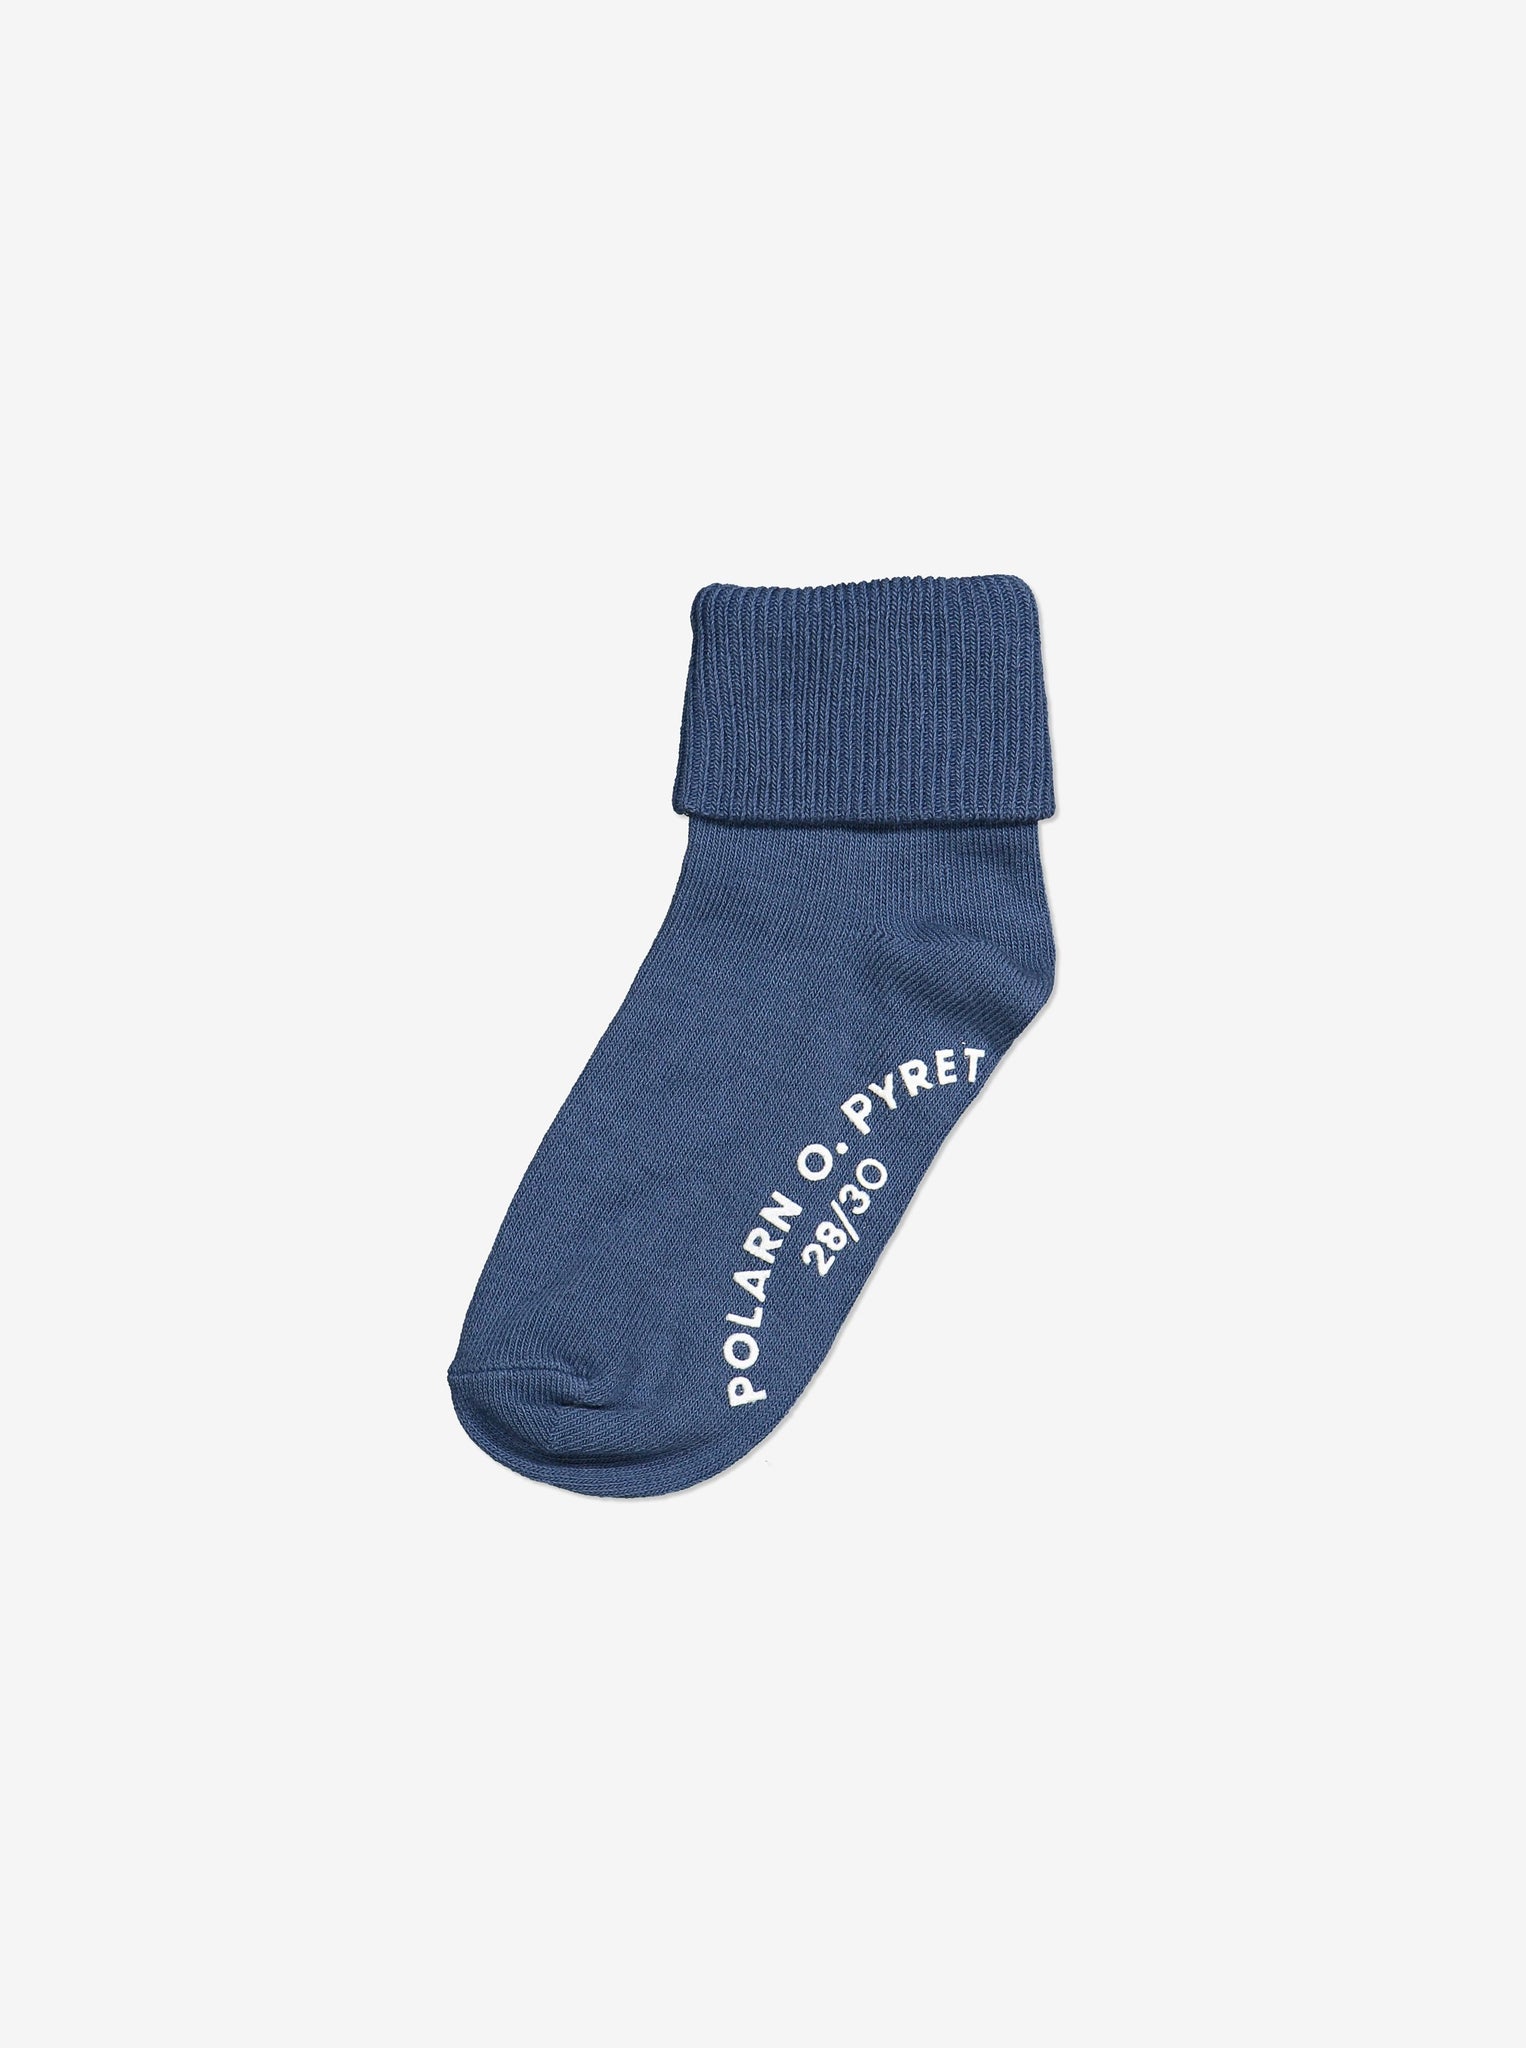 Two Pack Antislip Kids Socks unisex, warm comfortable organic cotton, polarn o. pyret quality